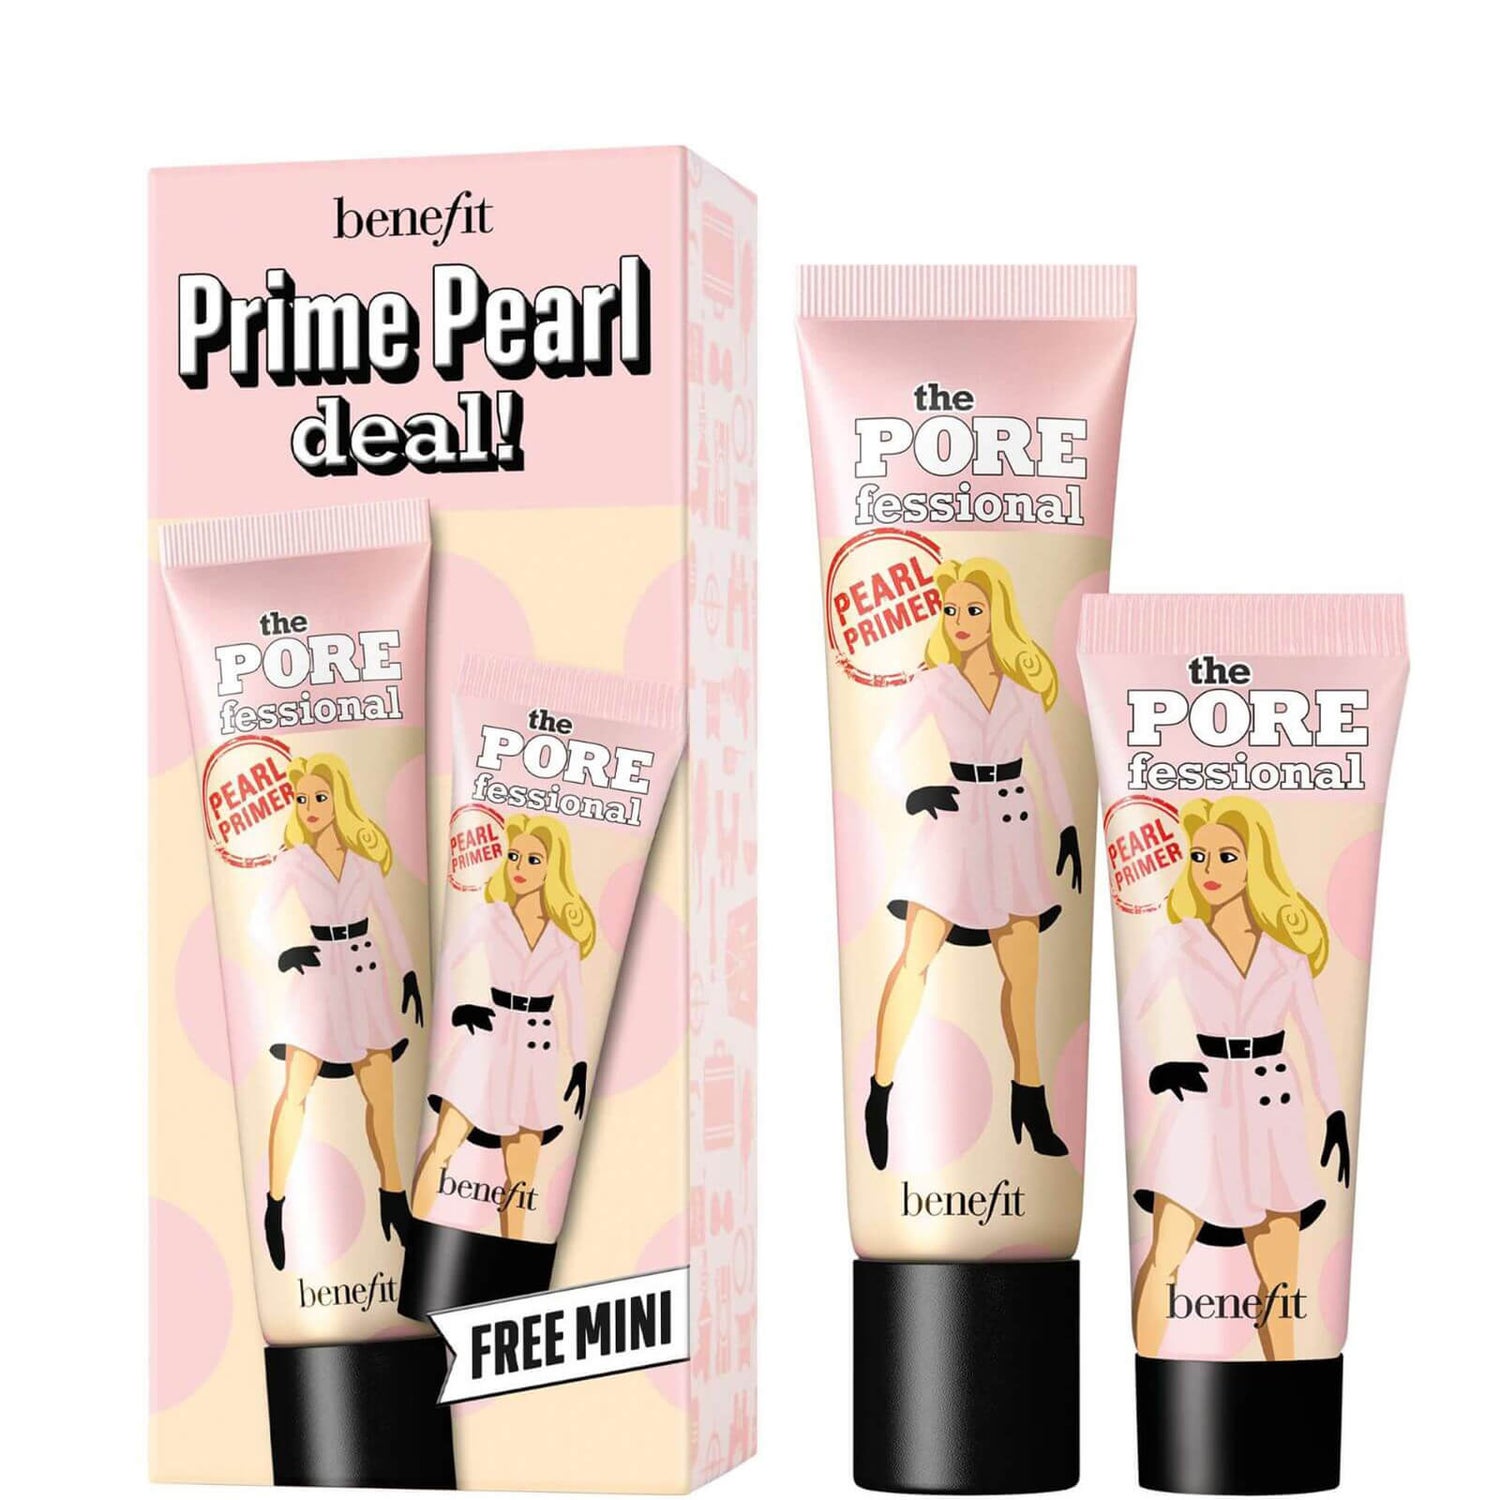 benefit Primer Pearl Deal Porefessional Face Primer Duo Set